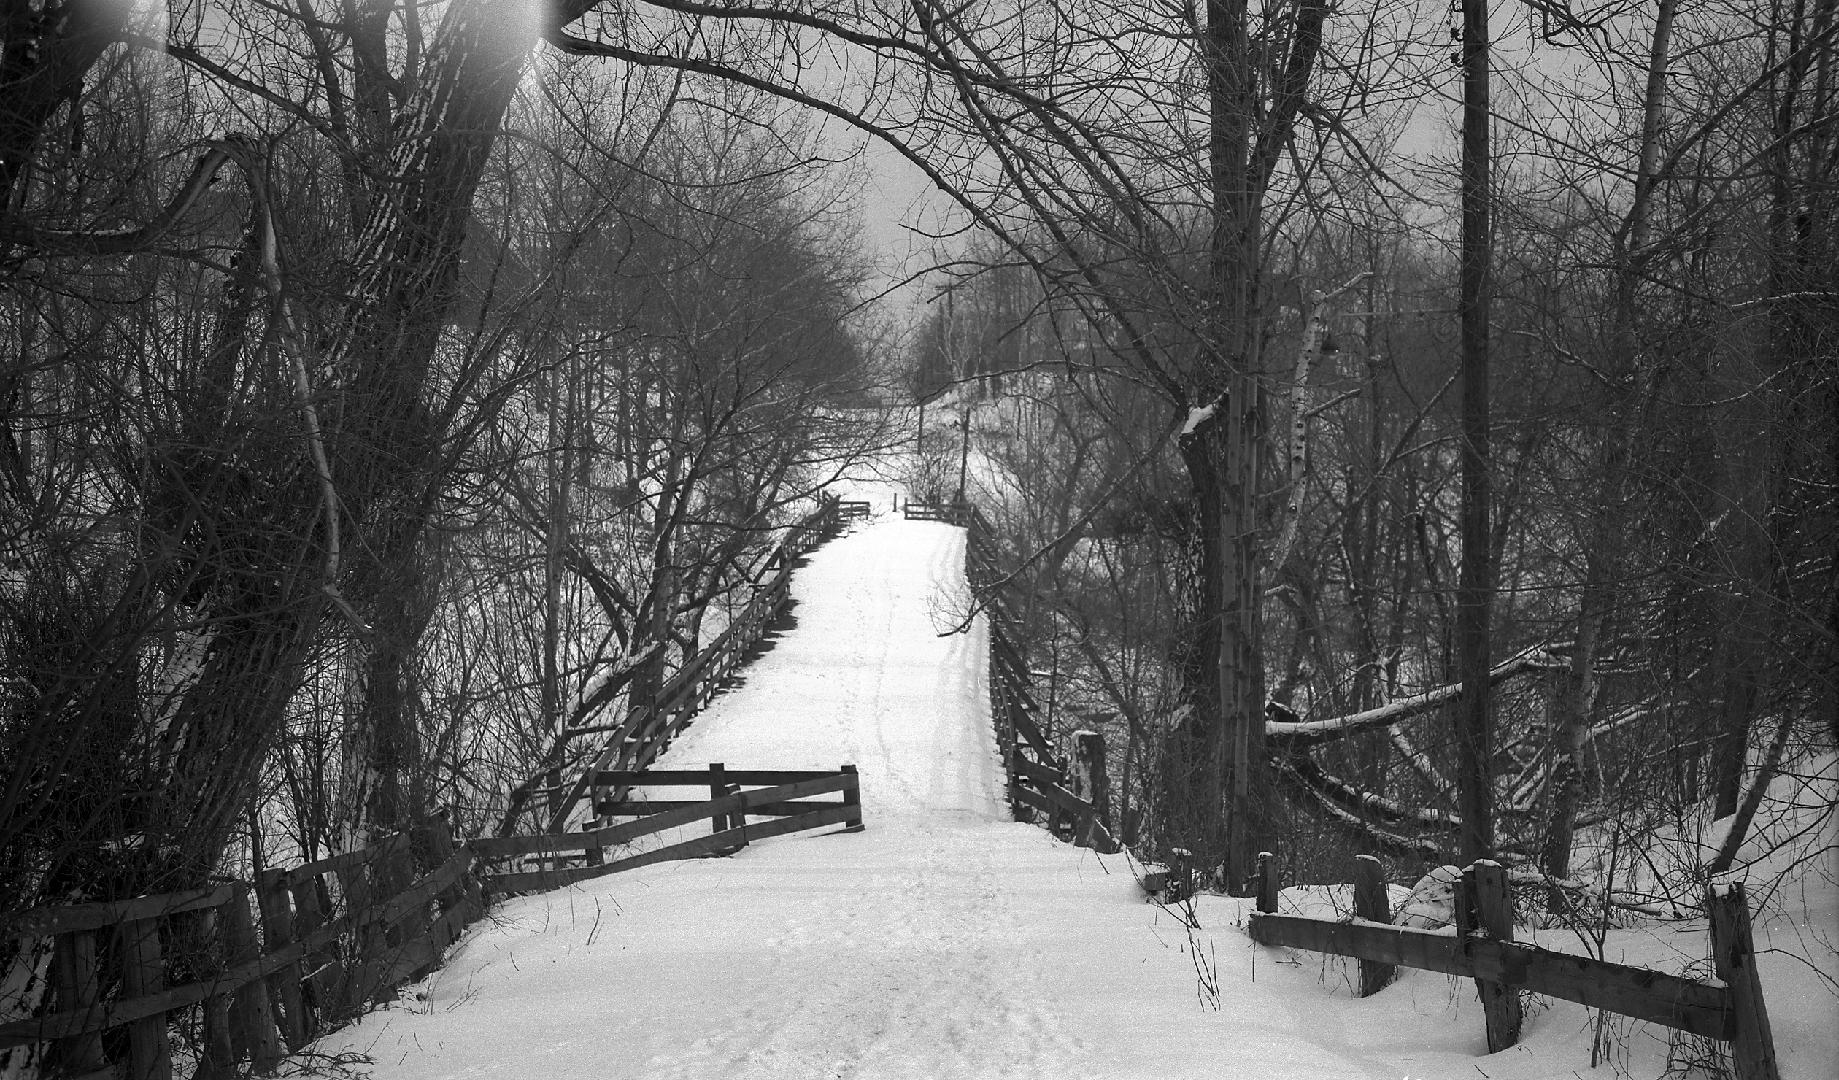 Image shows a bridge view in winter.